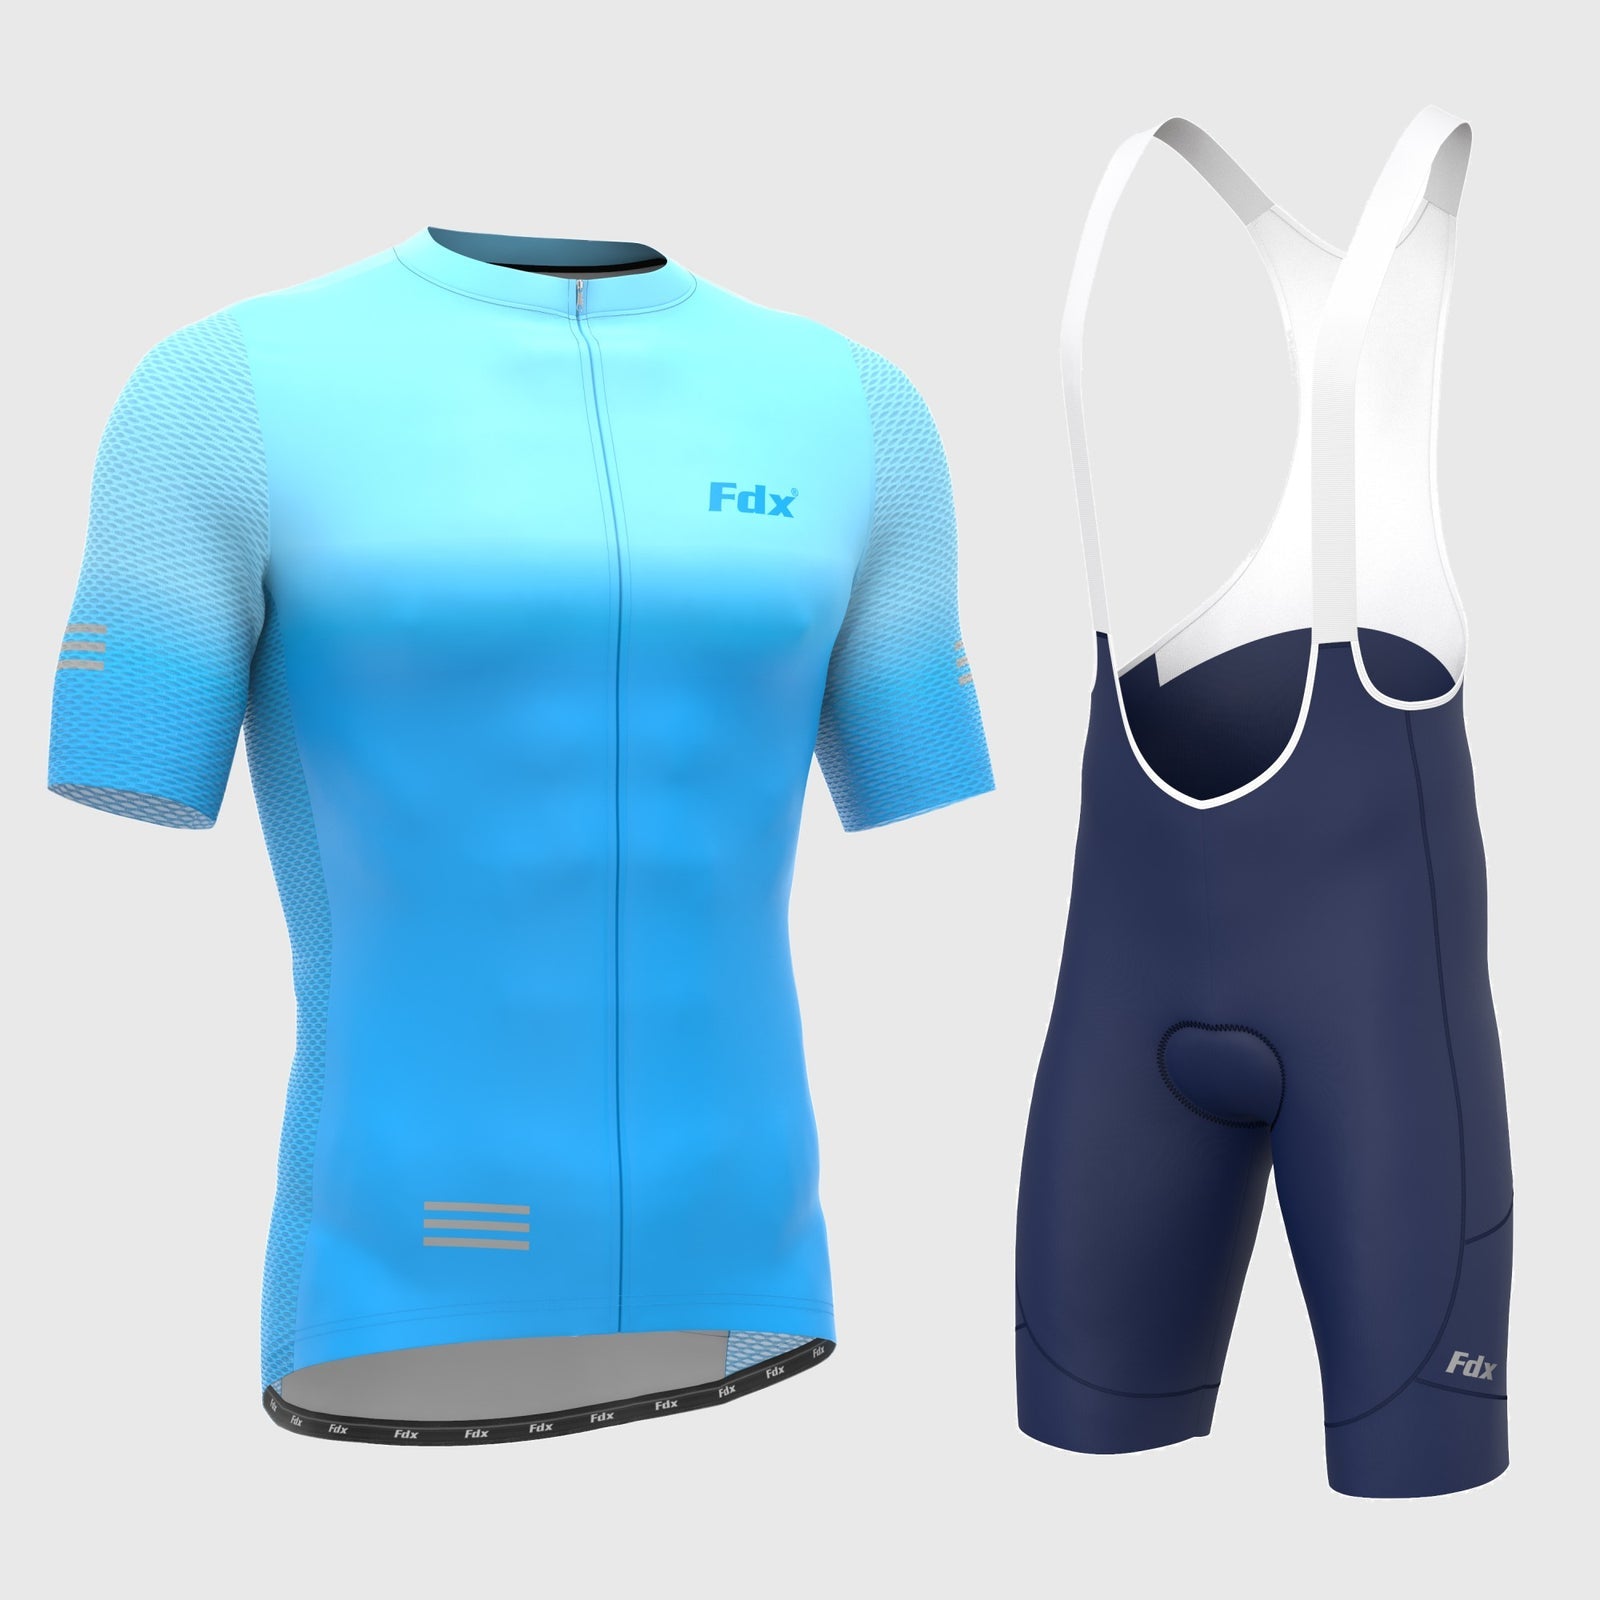 Fdx Mens Blue Short Sleeve Cycling Jersey & Gel Padded Bib Shorts Best Summer Road Bike Wear Light Weight, Hi-viz Reflectors & Pockets - Duo